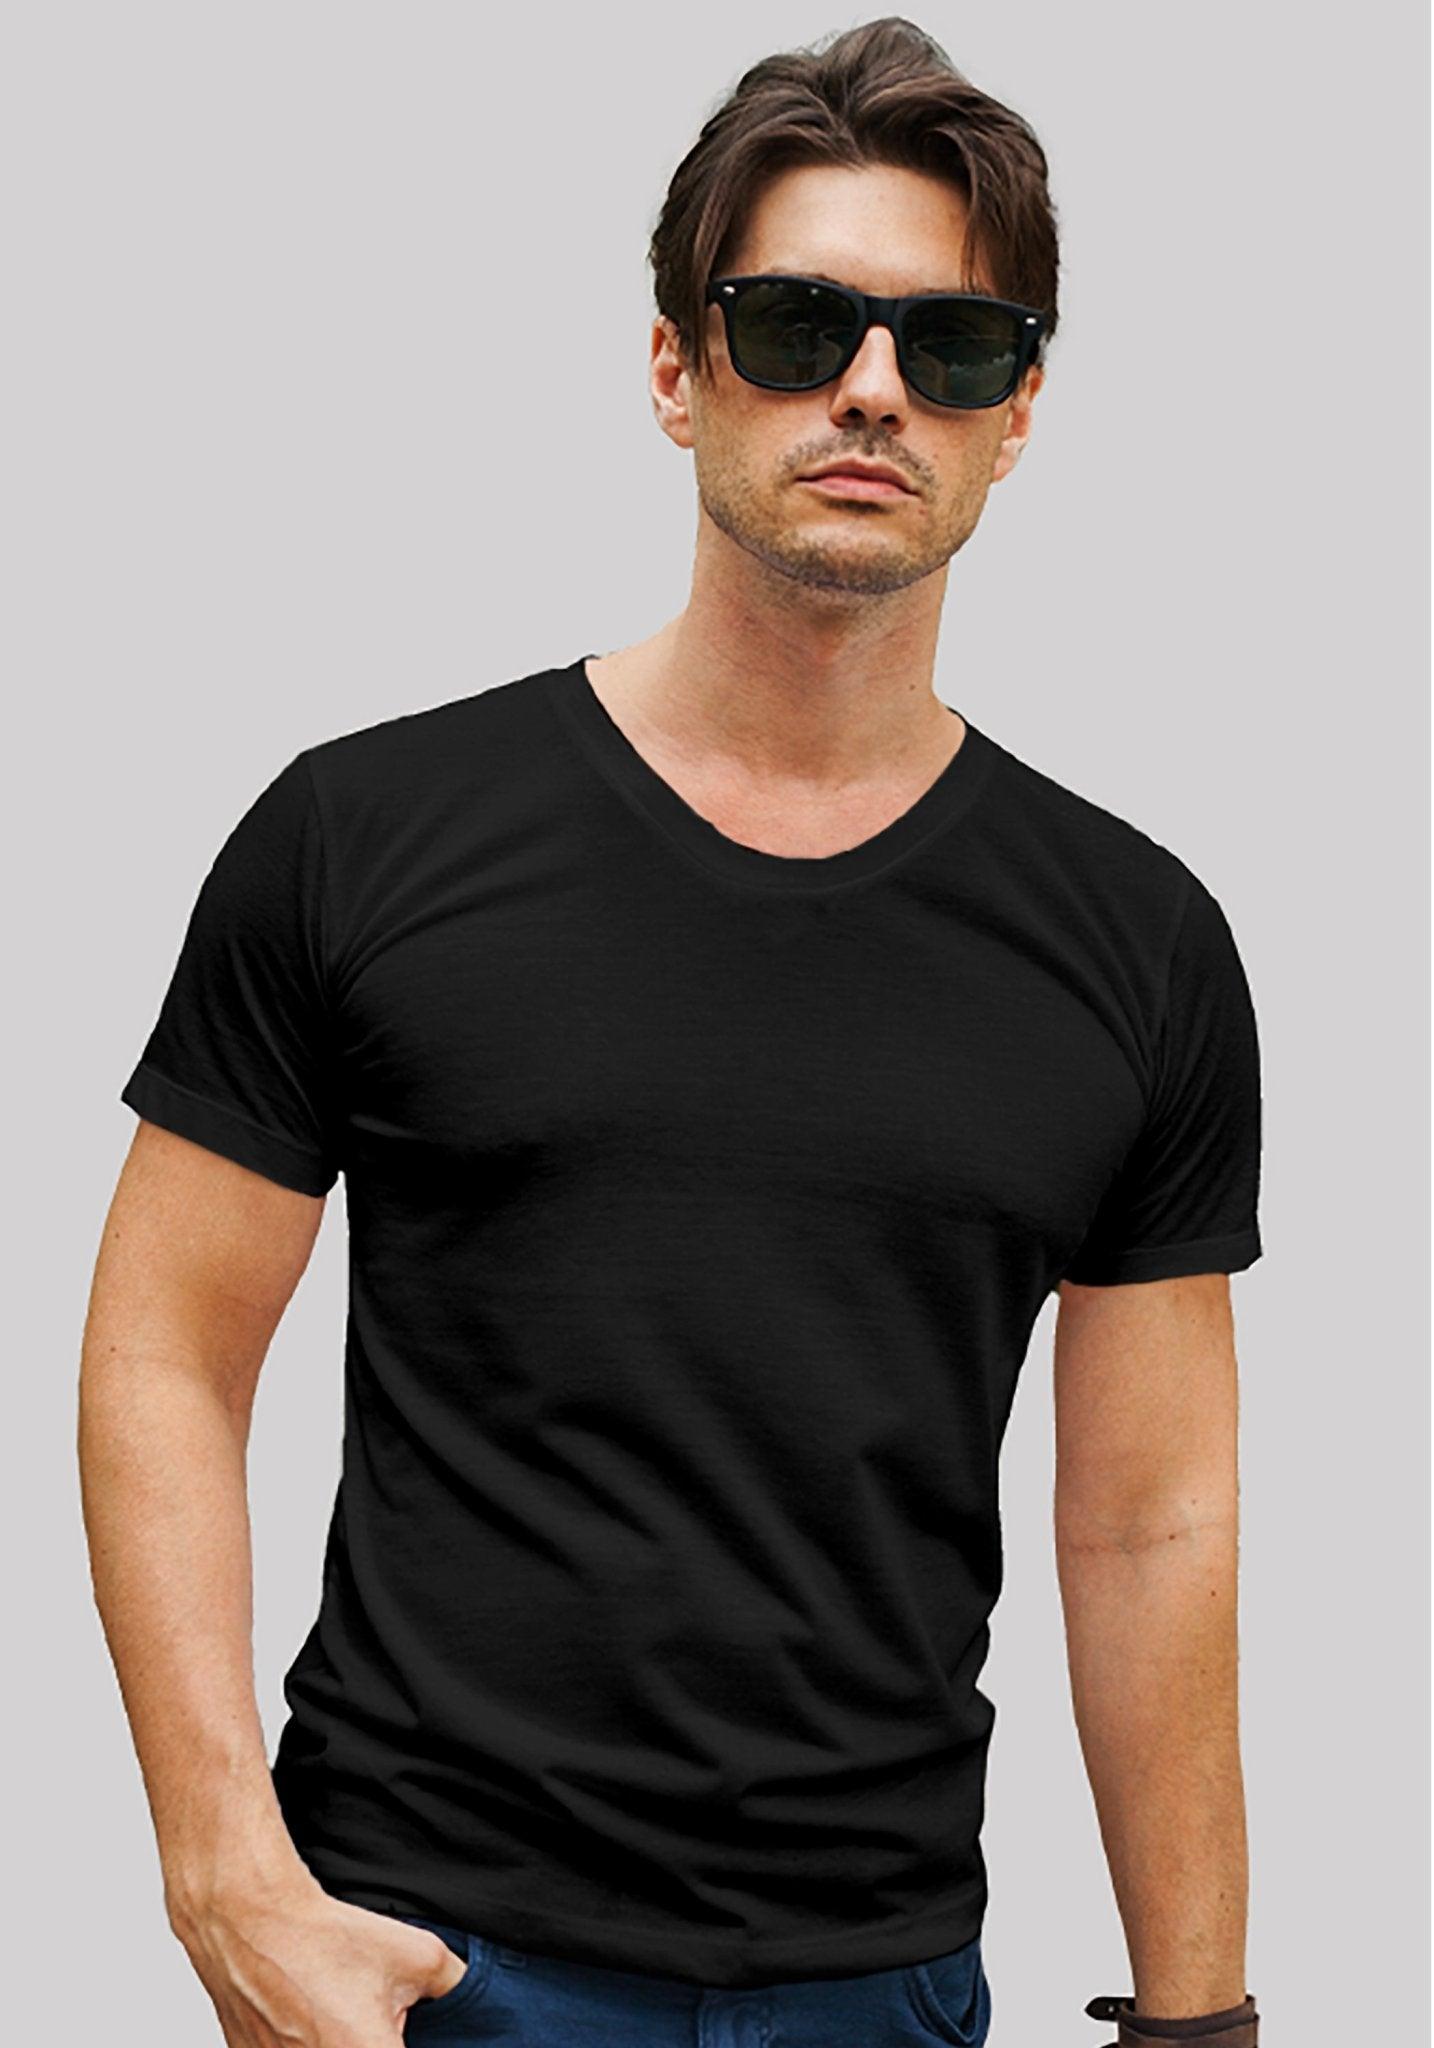 Solid Plain T Shirt Combo For Men In Jet Black Colour Variant